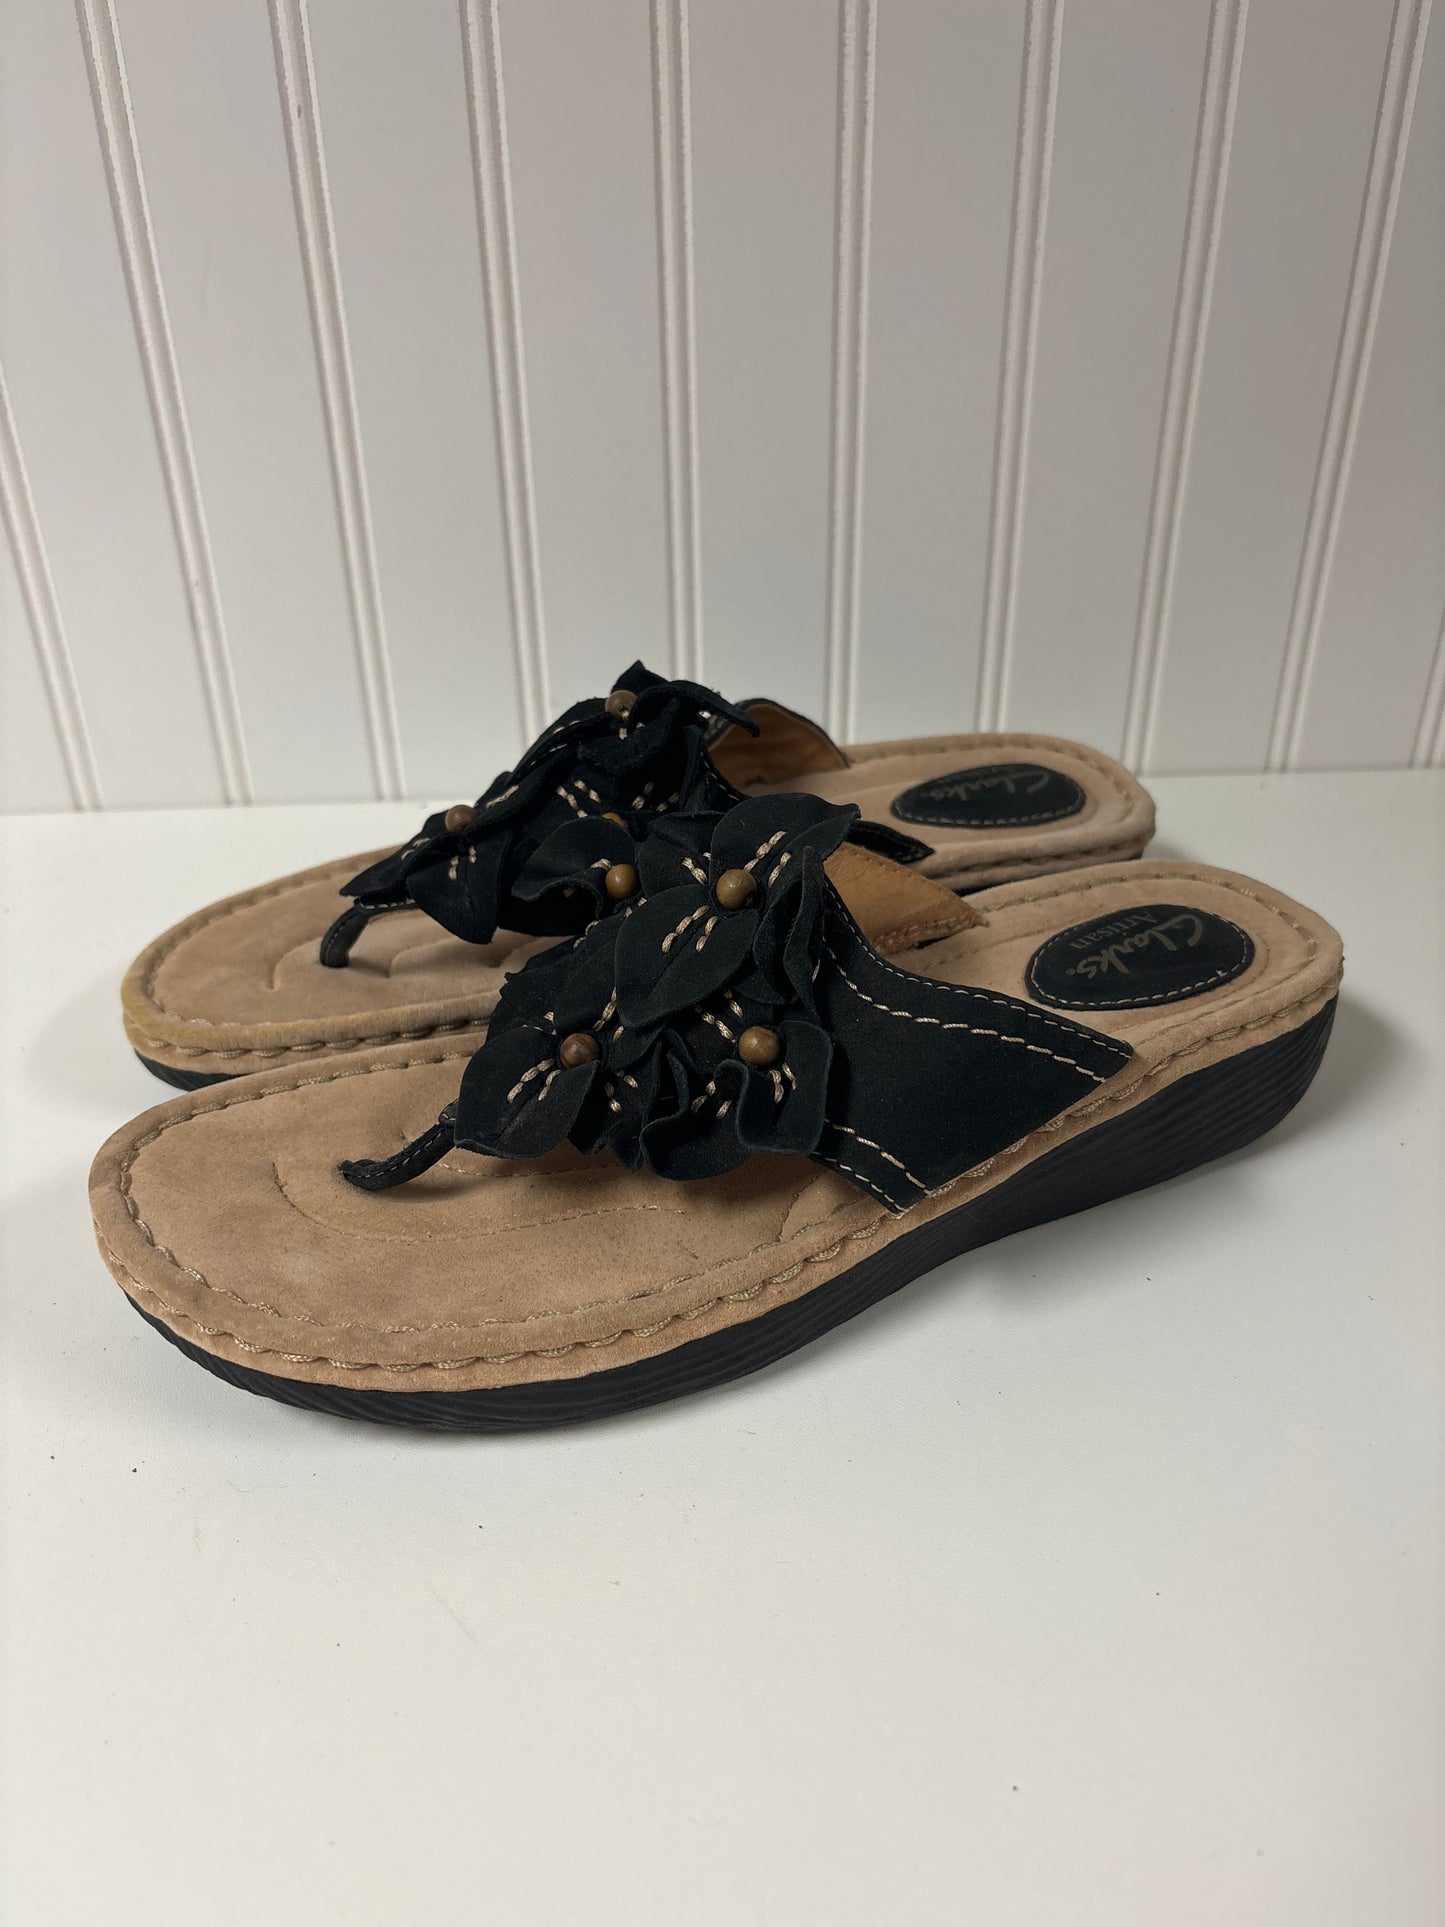 Sandals Flip Flops By Clarks  Size: 9.5